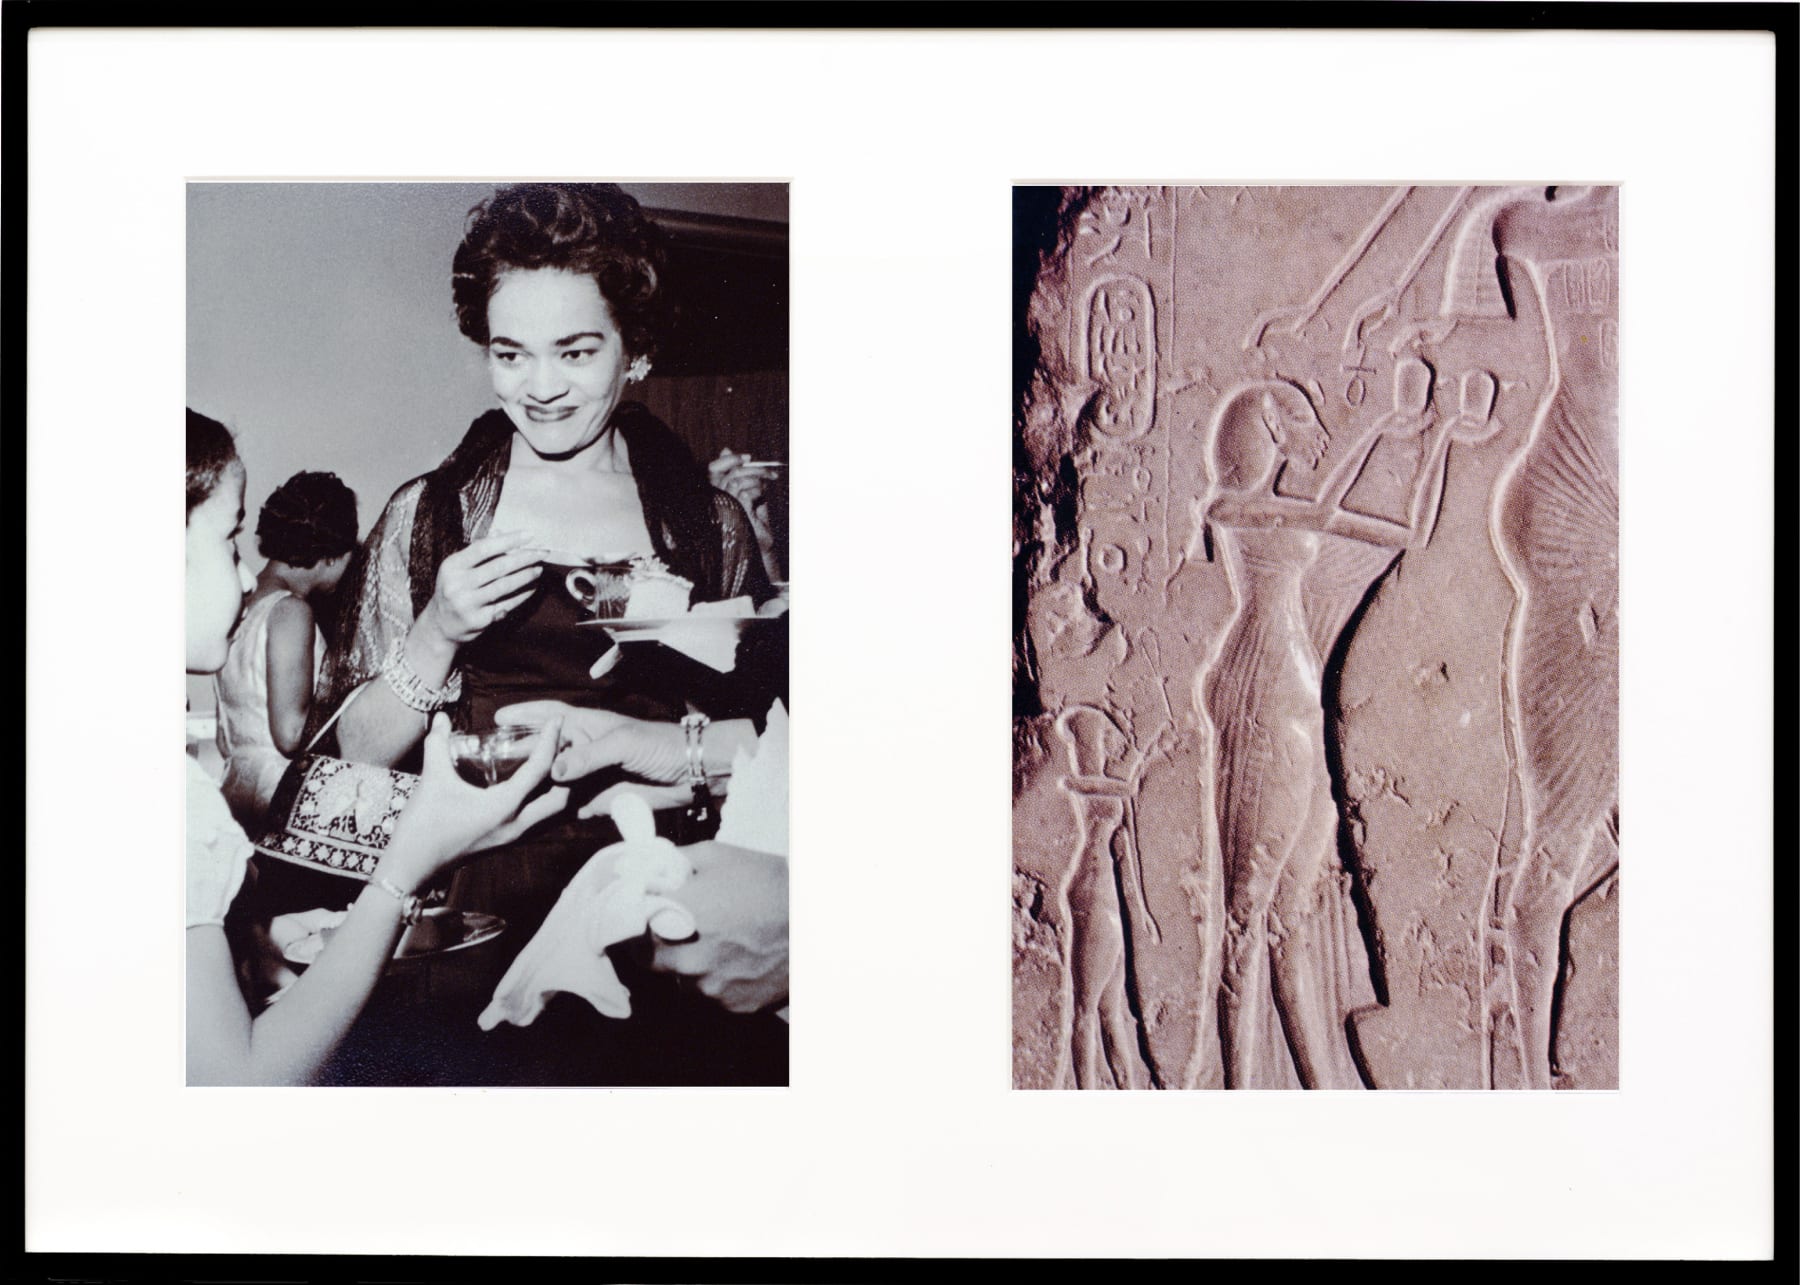 Lorraine O'Grady, Miscegenated Family Album (Ceremonial Occasions II), L: Devonia attending a wedding; R: Nefertiti performing an Aten ritual, 1980/1994